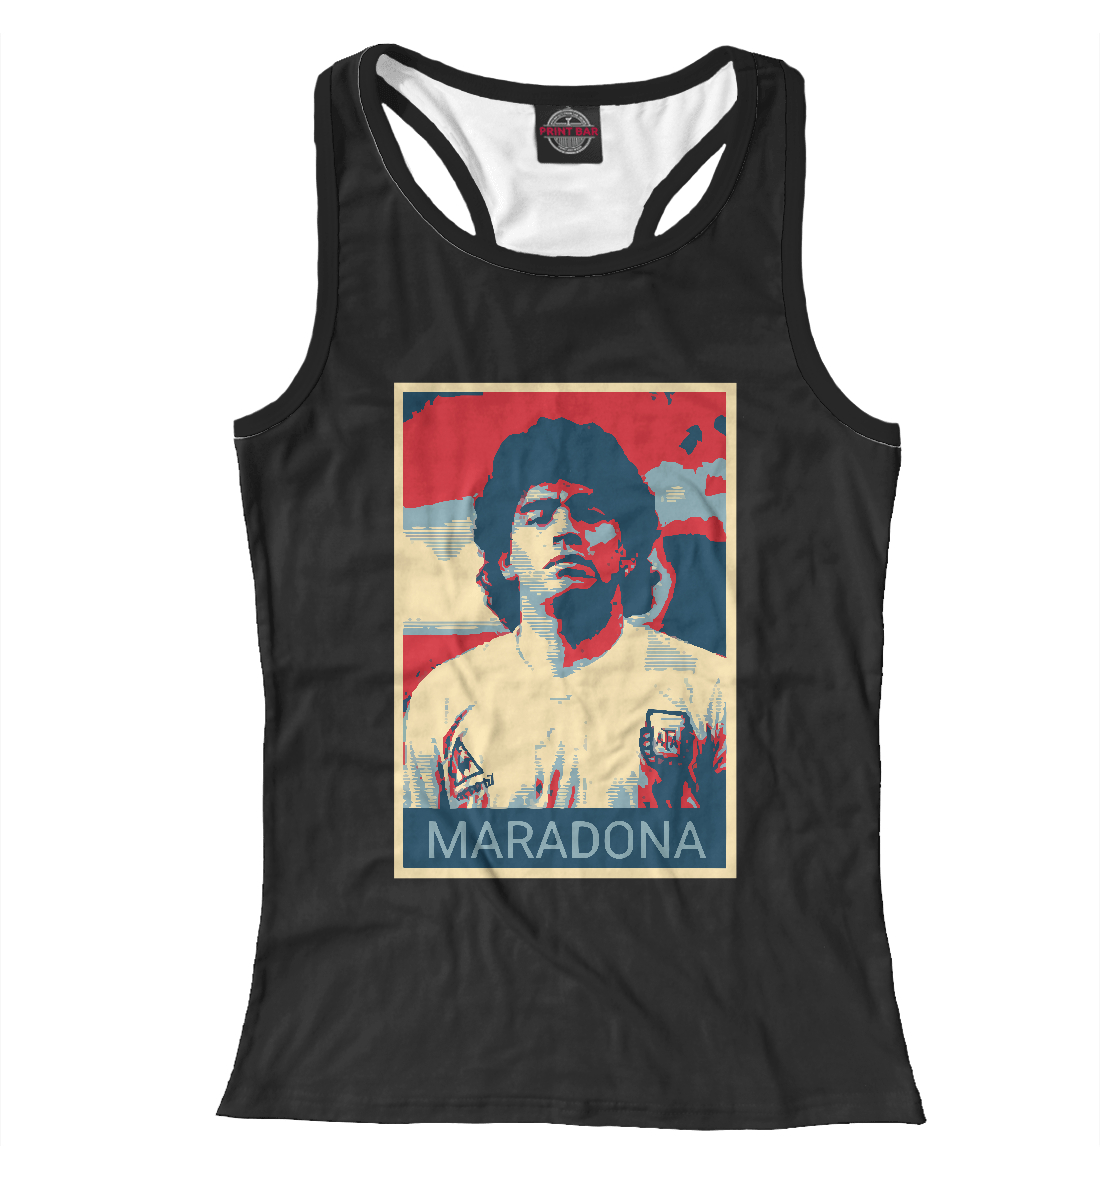 Женская Борцовка Maradona, артикул FLT-836145-mayb-1mp